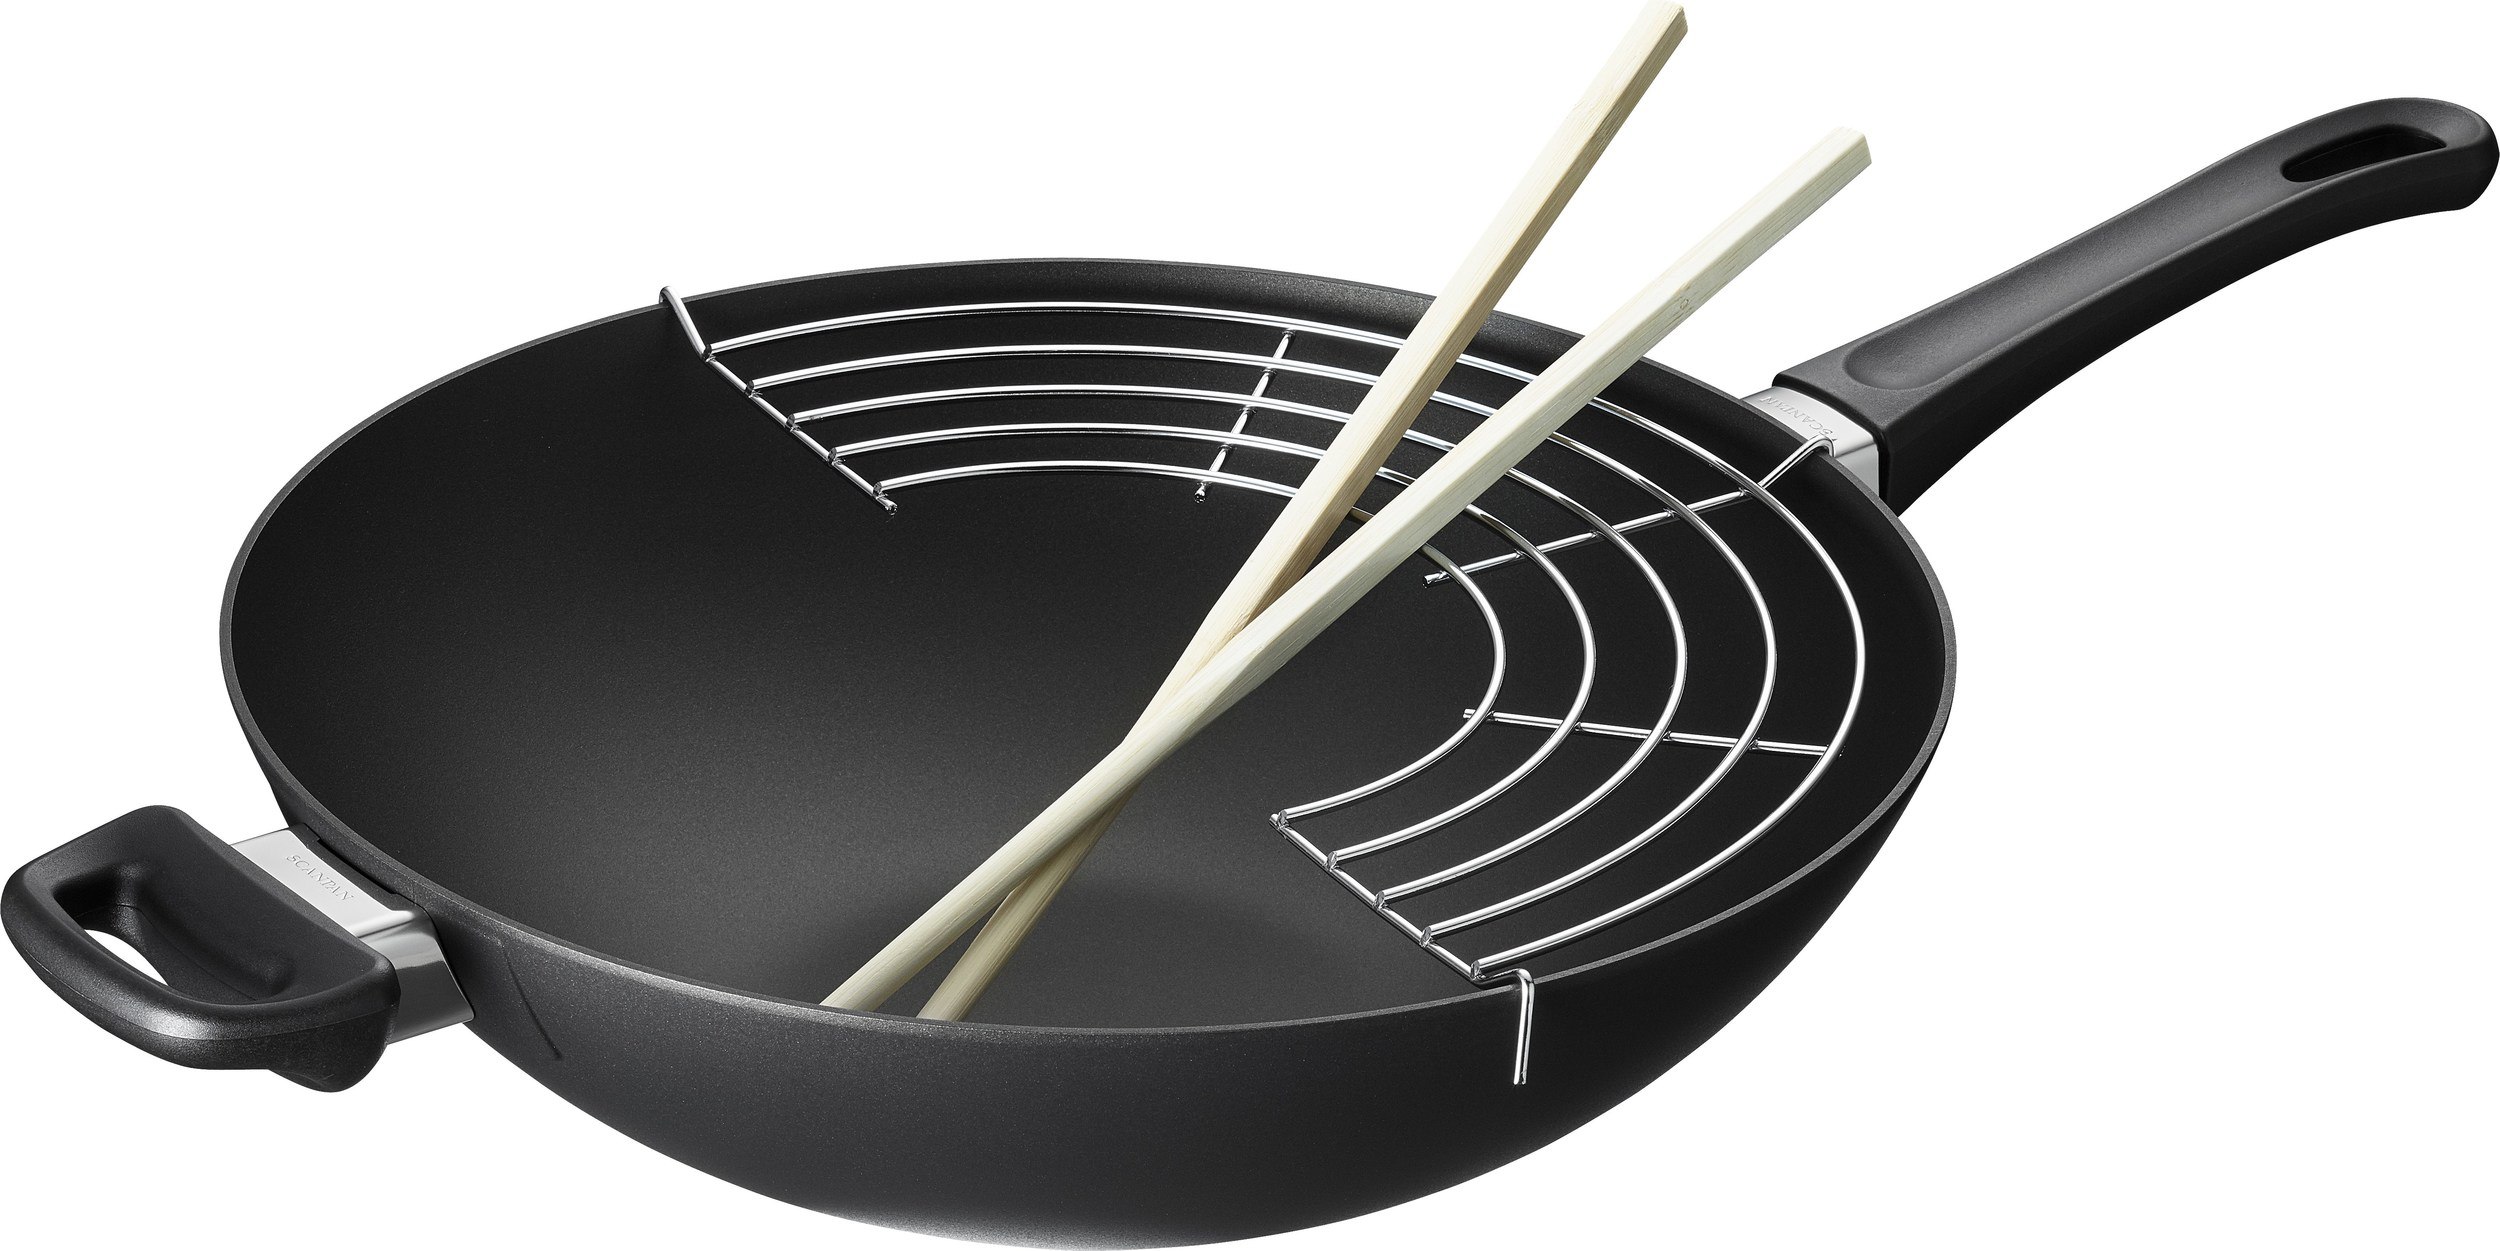 https://3fa-media.com/scanpan/scanpan-classic-wok-32-cm-with-grill-and-chopsticks__65665_8028765-s2500x2500.jpg